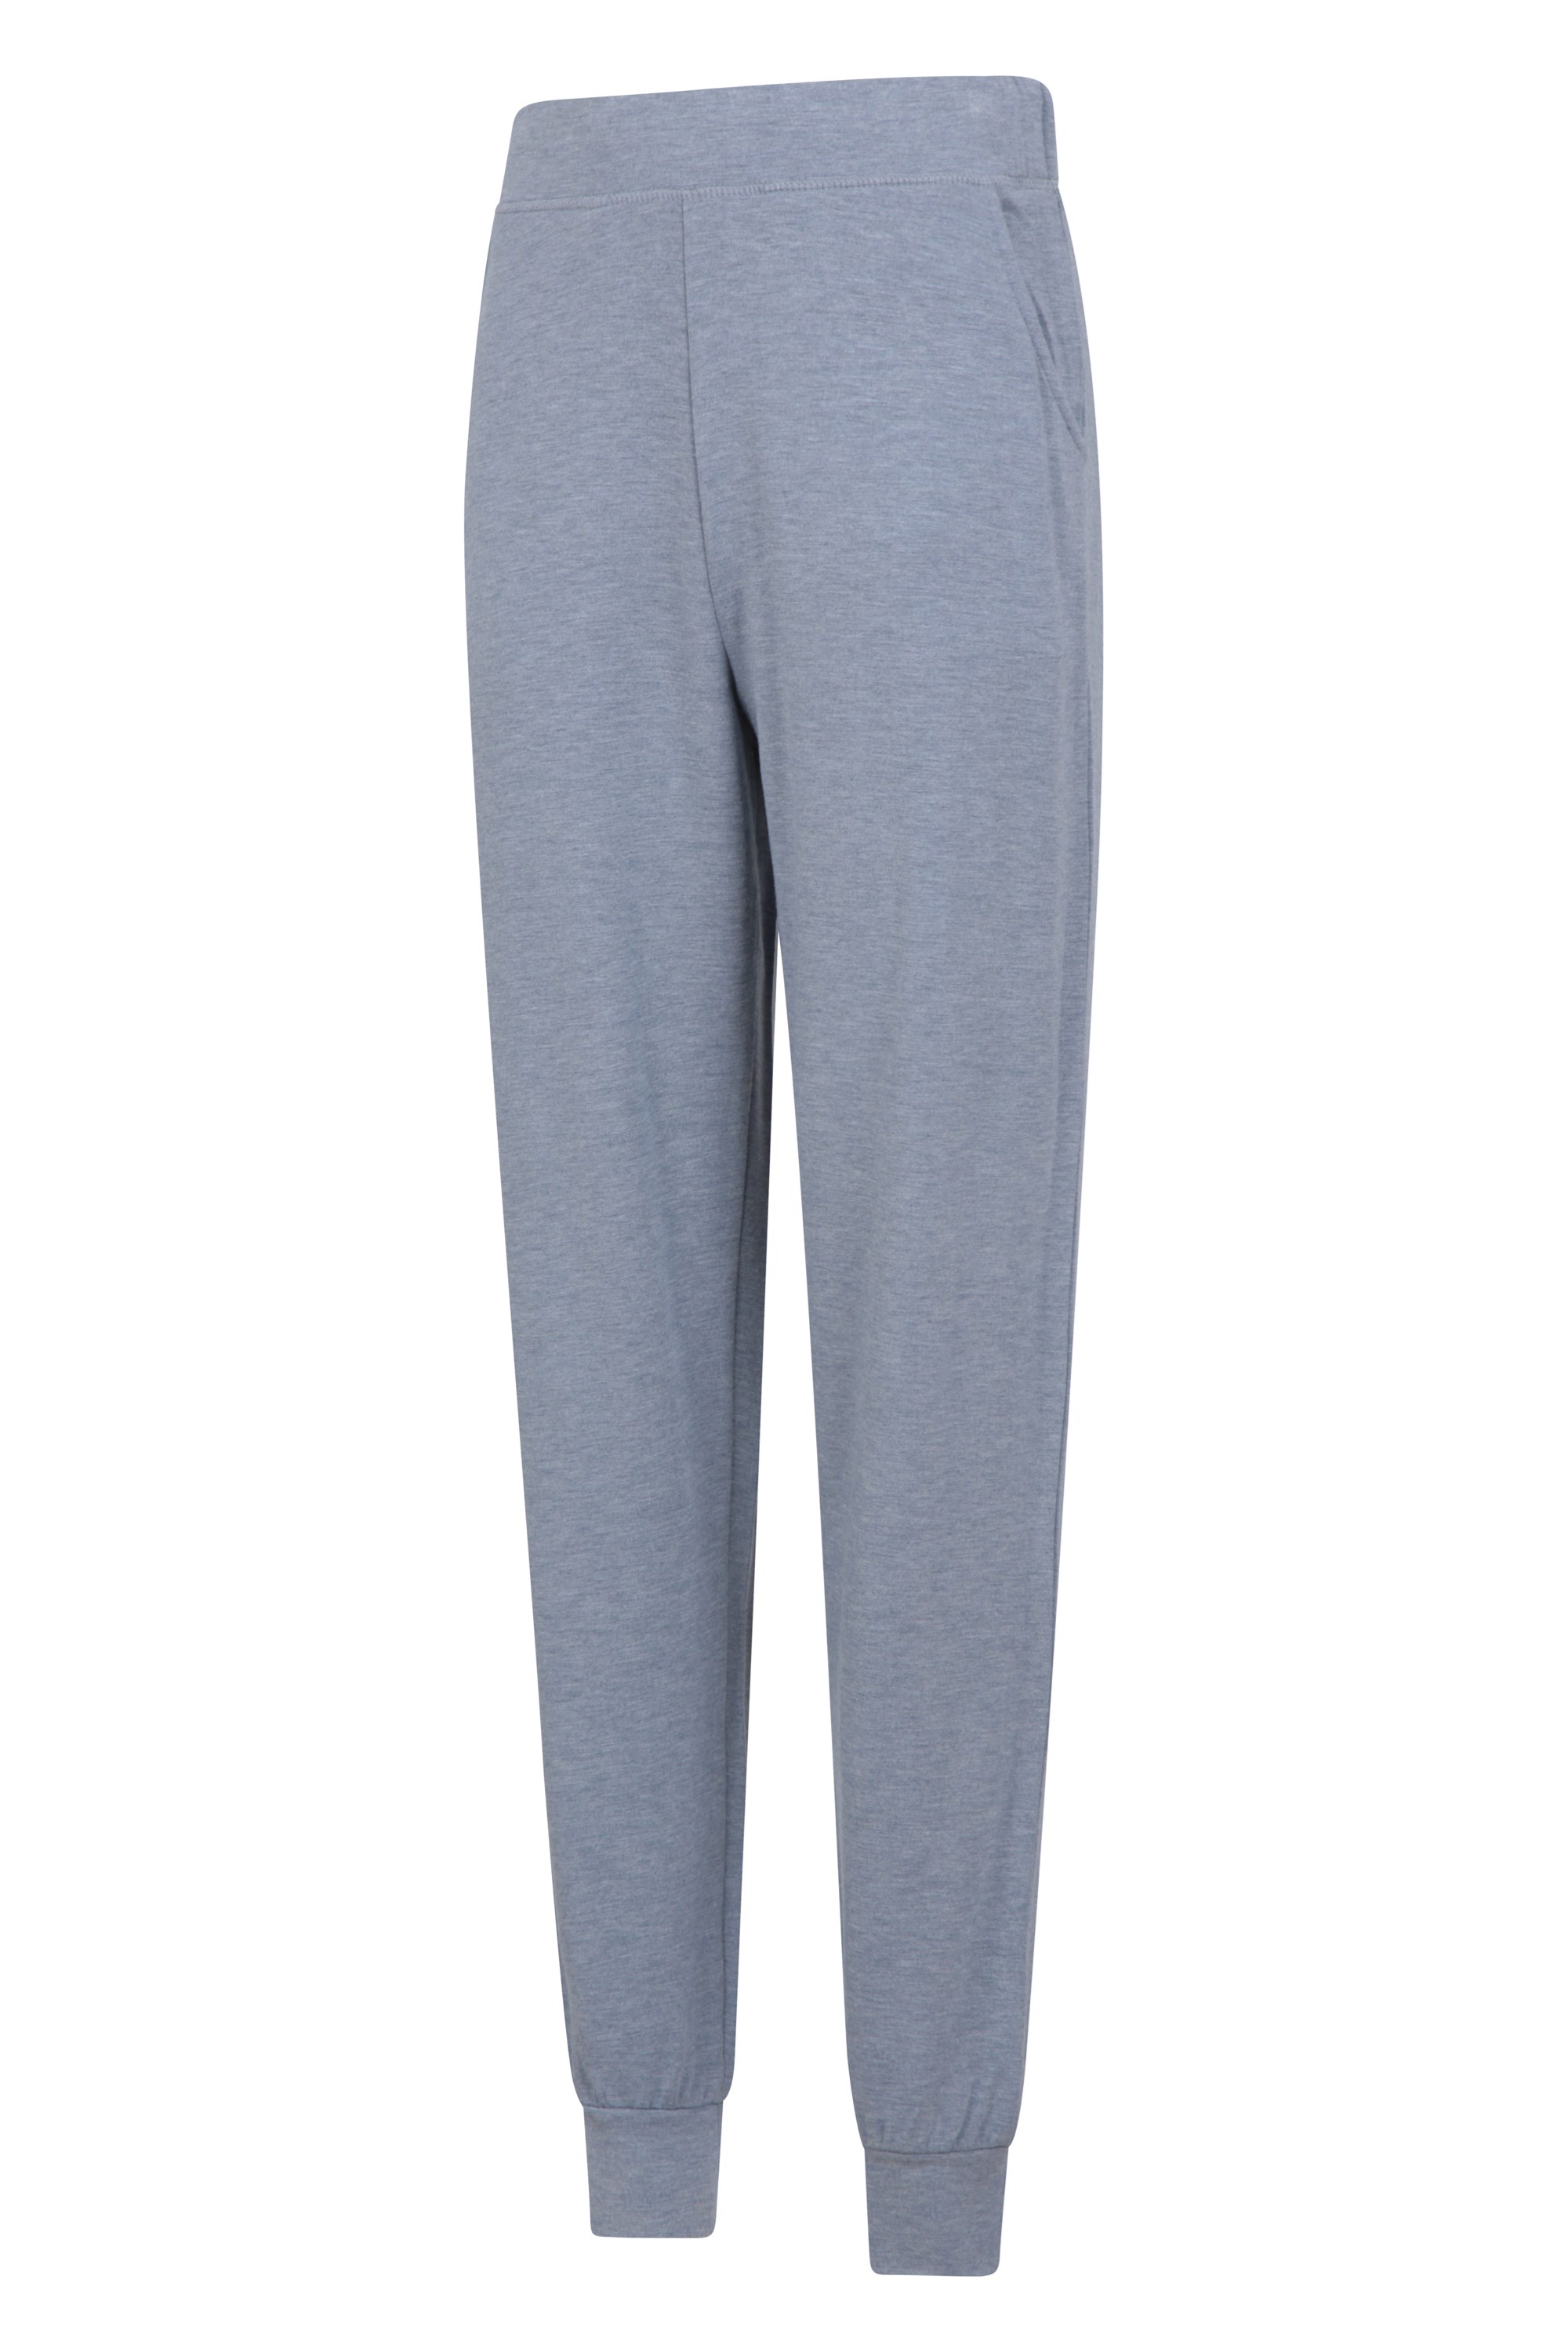 Women Sweatpants: Shop Warm Pants, Joggers, Fleece Pants